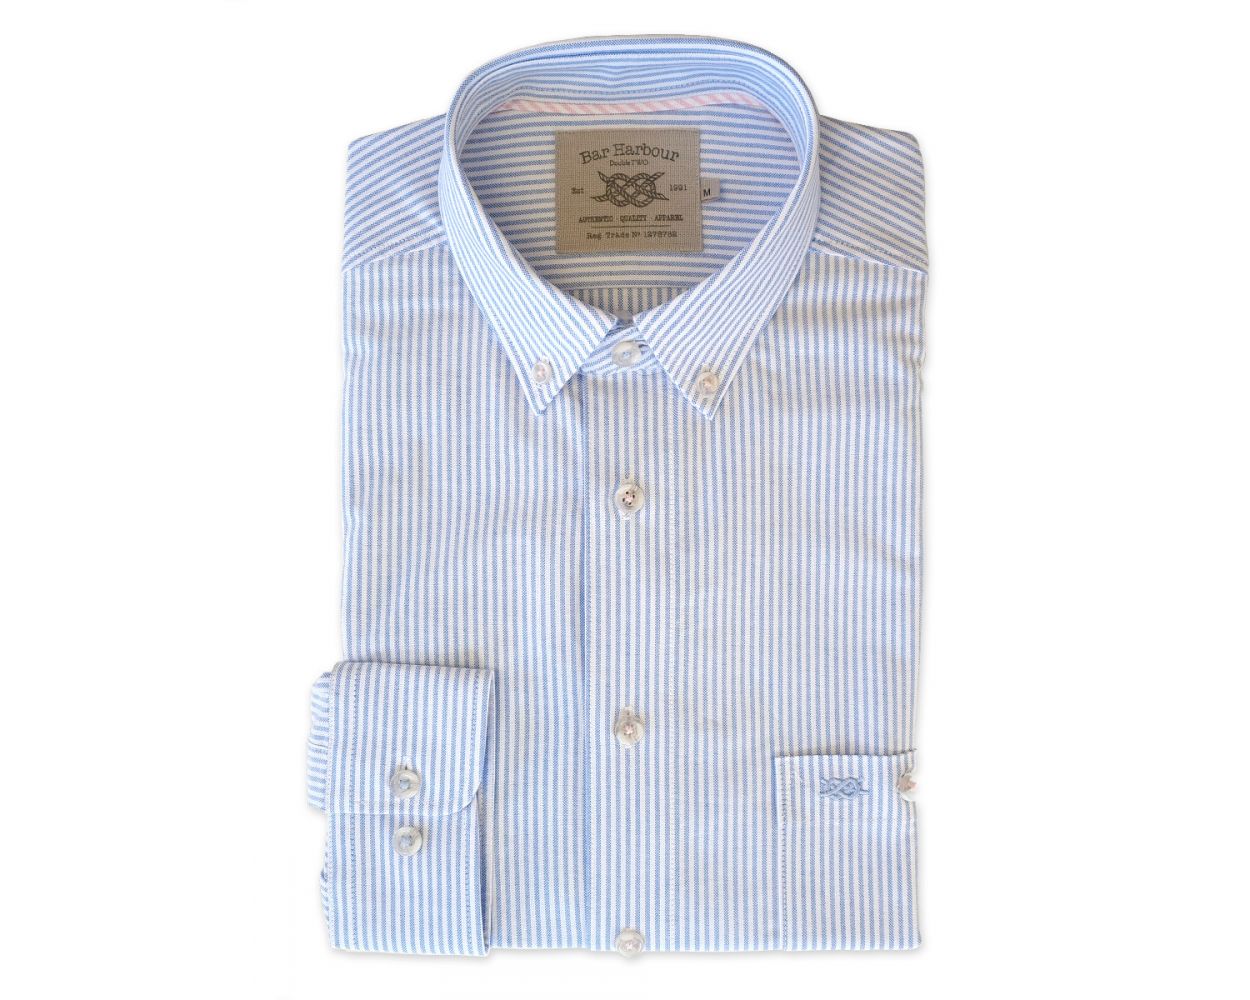 Fashion Formal Shirts Long Sleeve Shirts Jacques britt Long Sleeve Shirt blue-white striped pattern casual look 